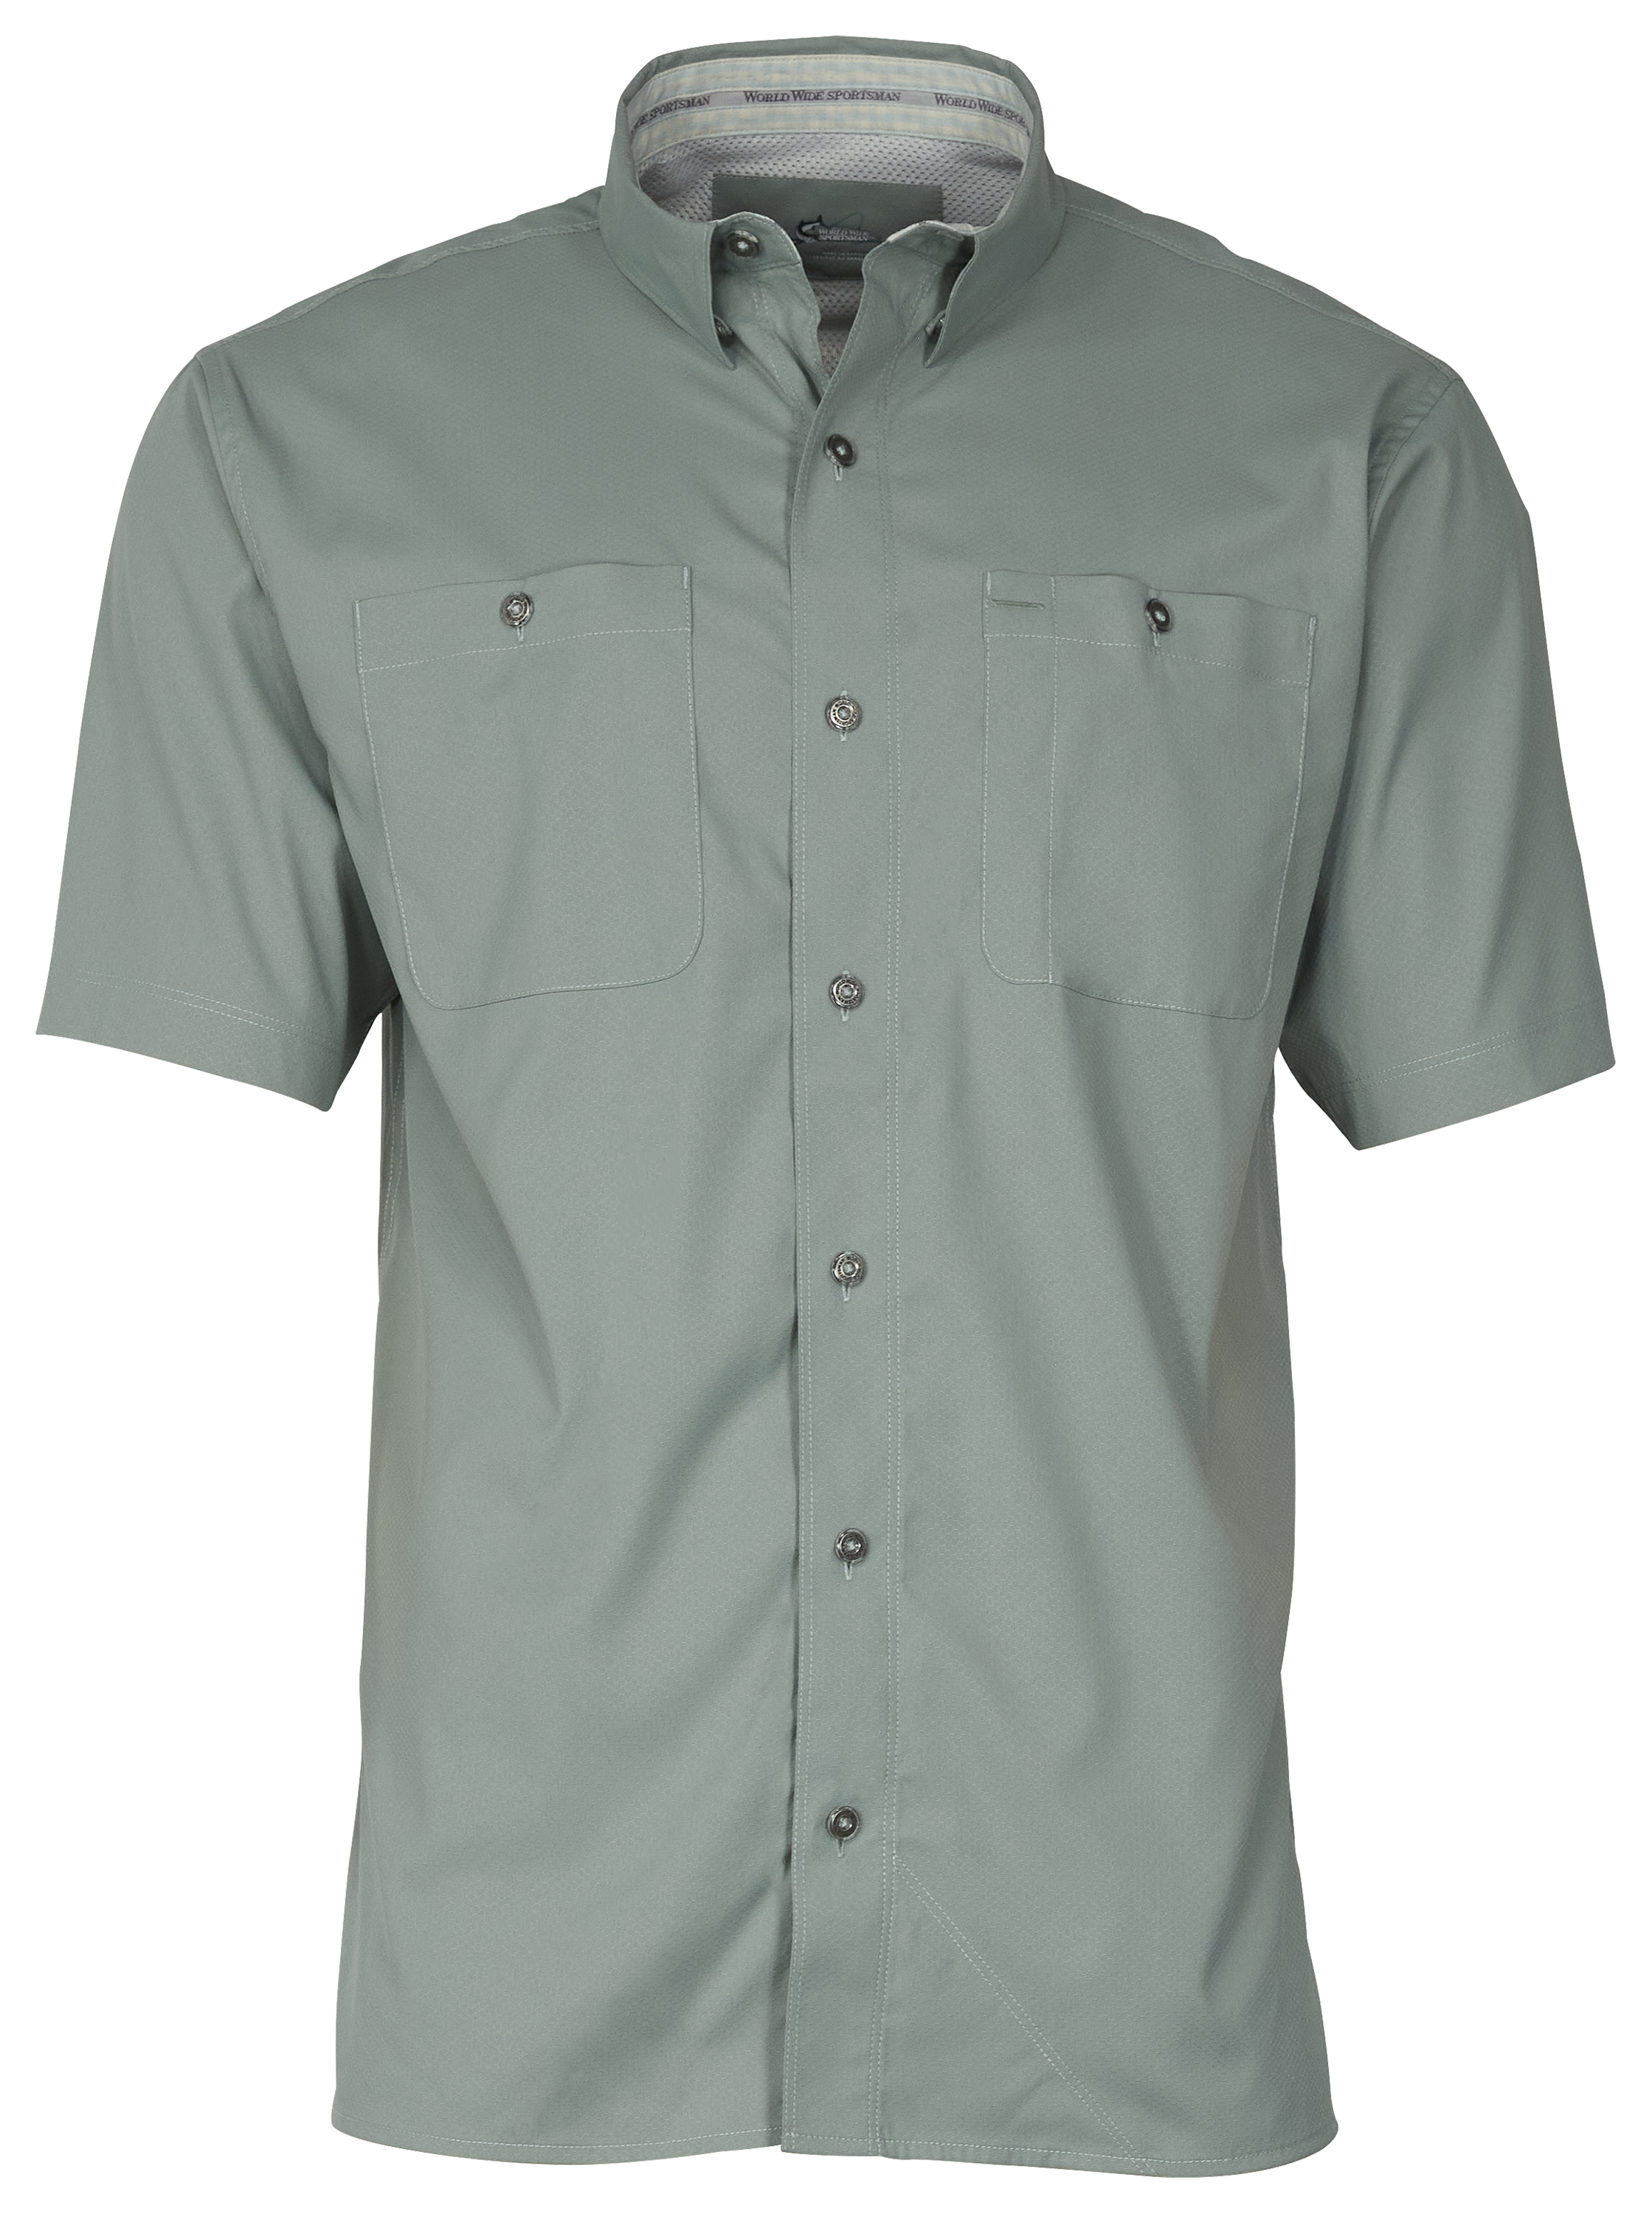 World Wide Sportsman Ultimate Angler Solid Short-Sleeve Shirt for Men - Iceberg Green - M